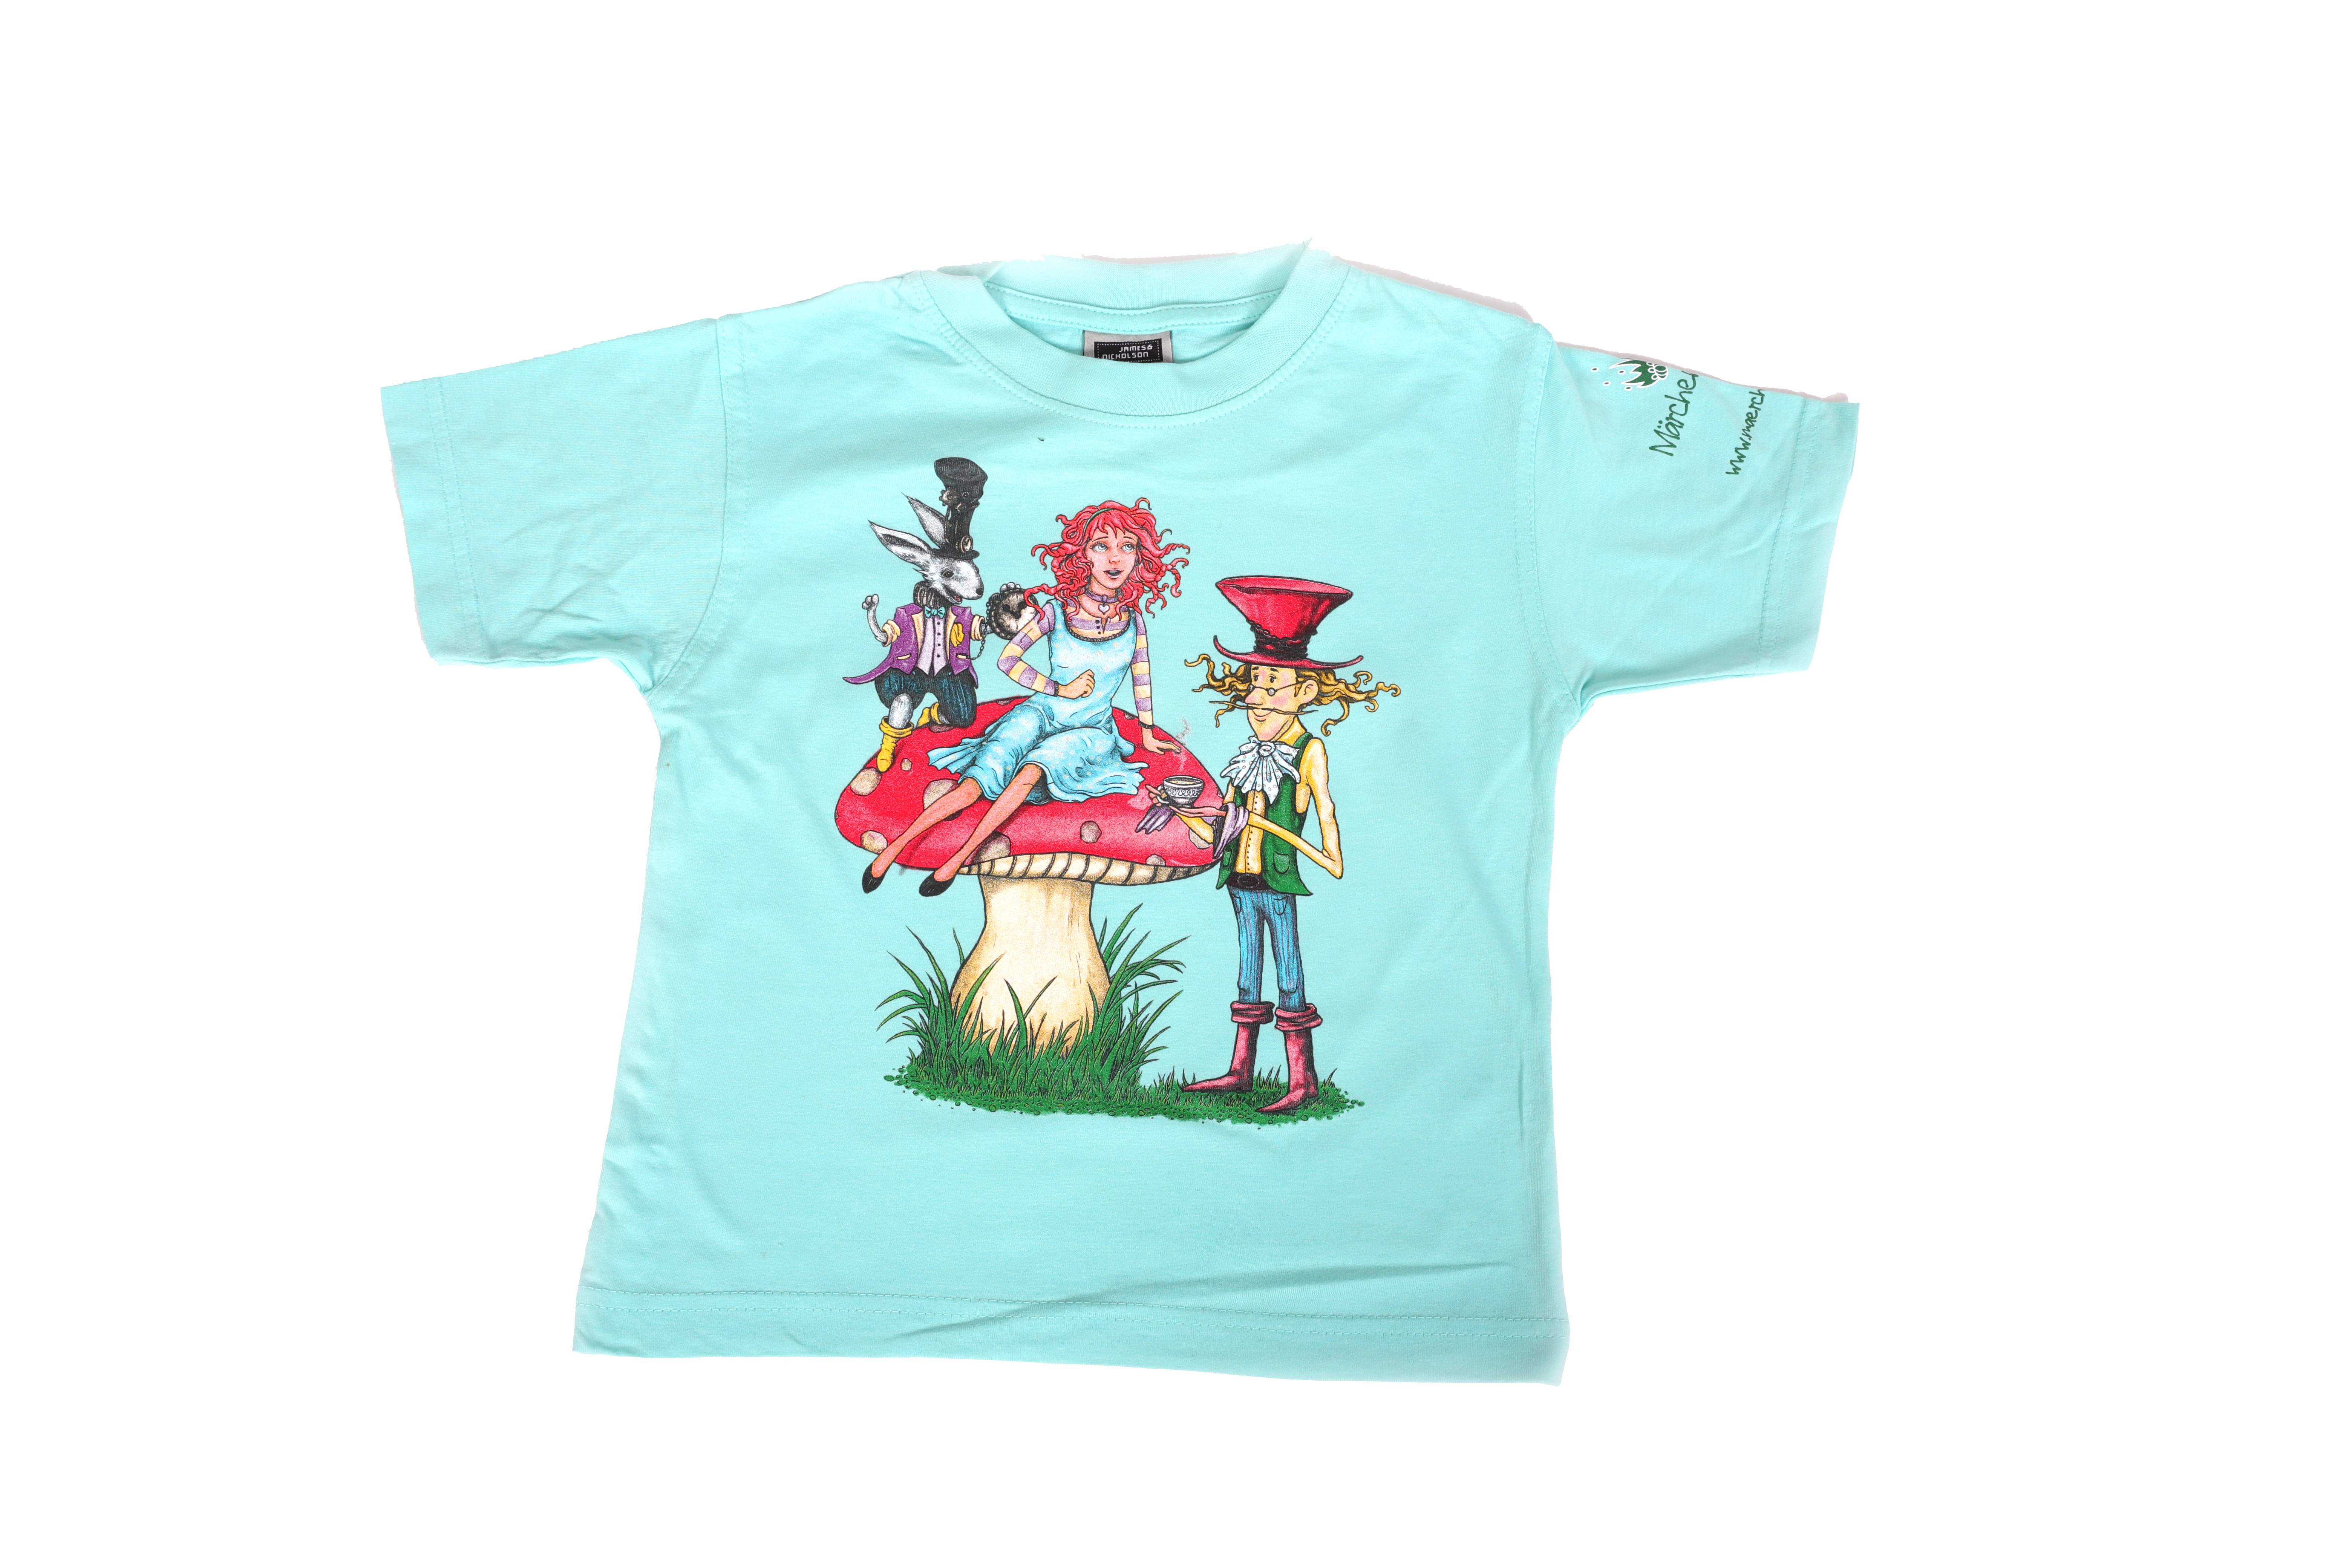 Alice im Wunderland T-Shirt Mintgrün